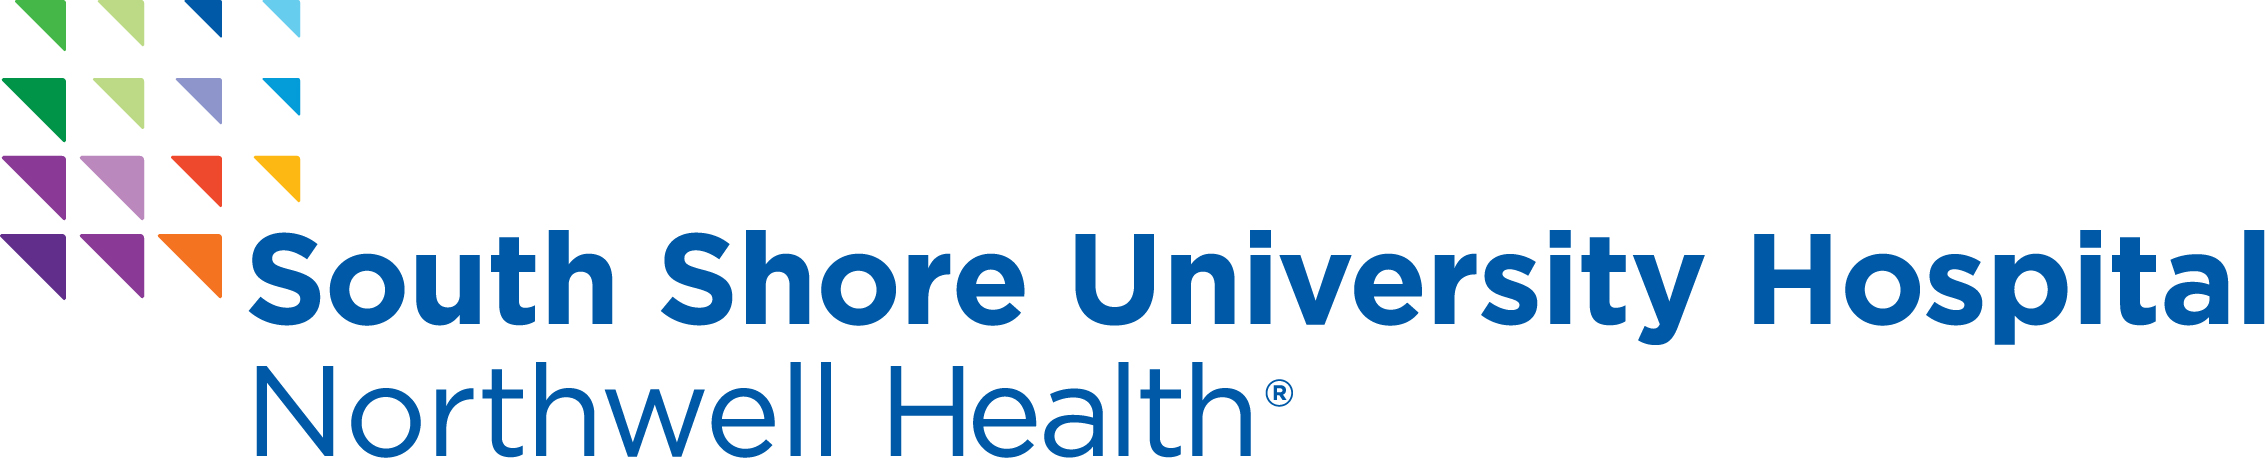 South Shore University Hospital Research Symposium